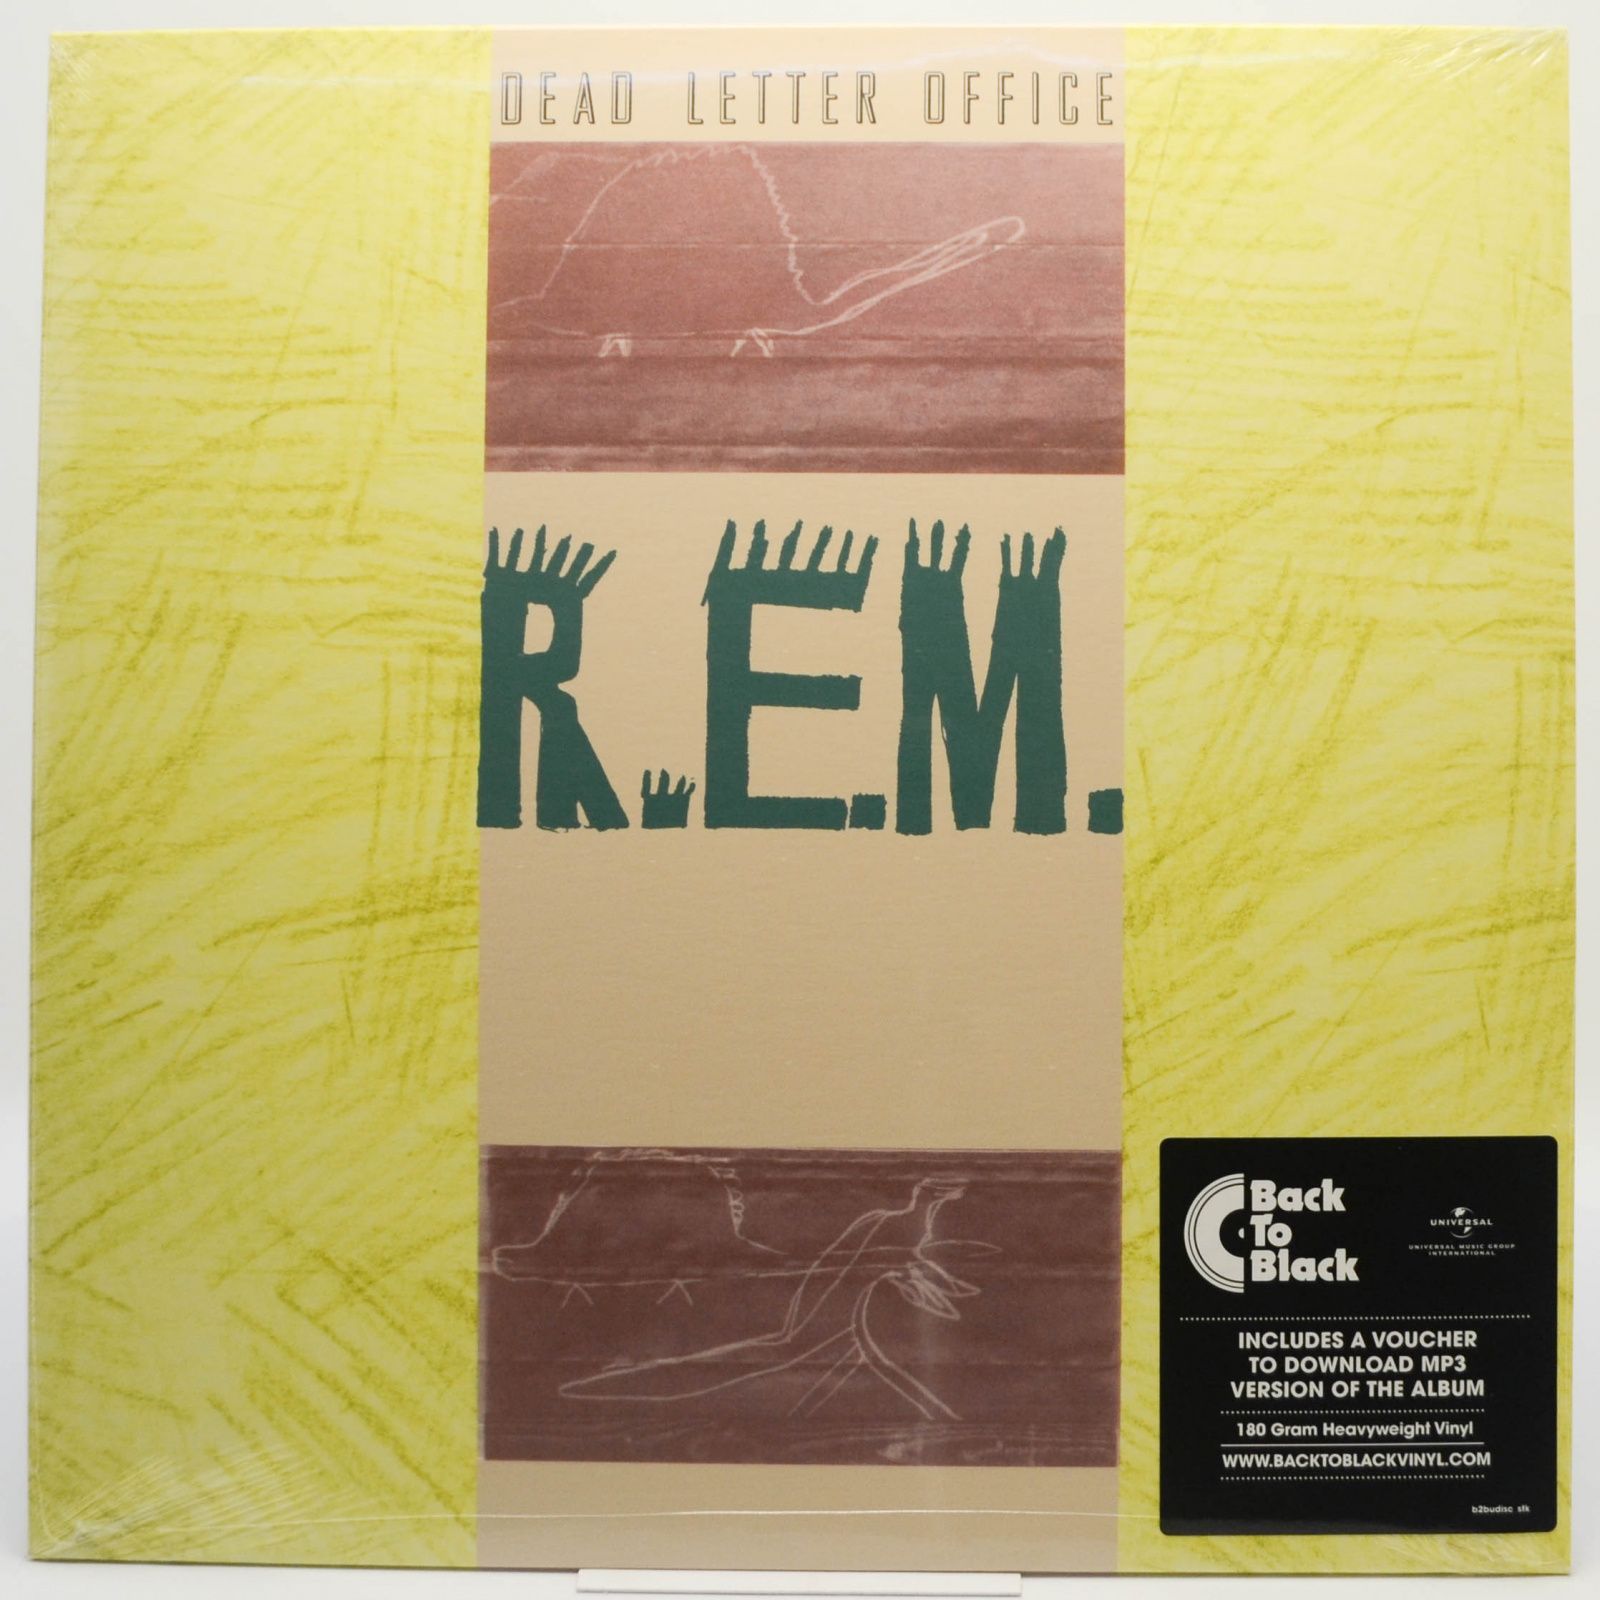 Dead Letter Office, 1987